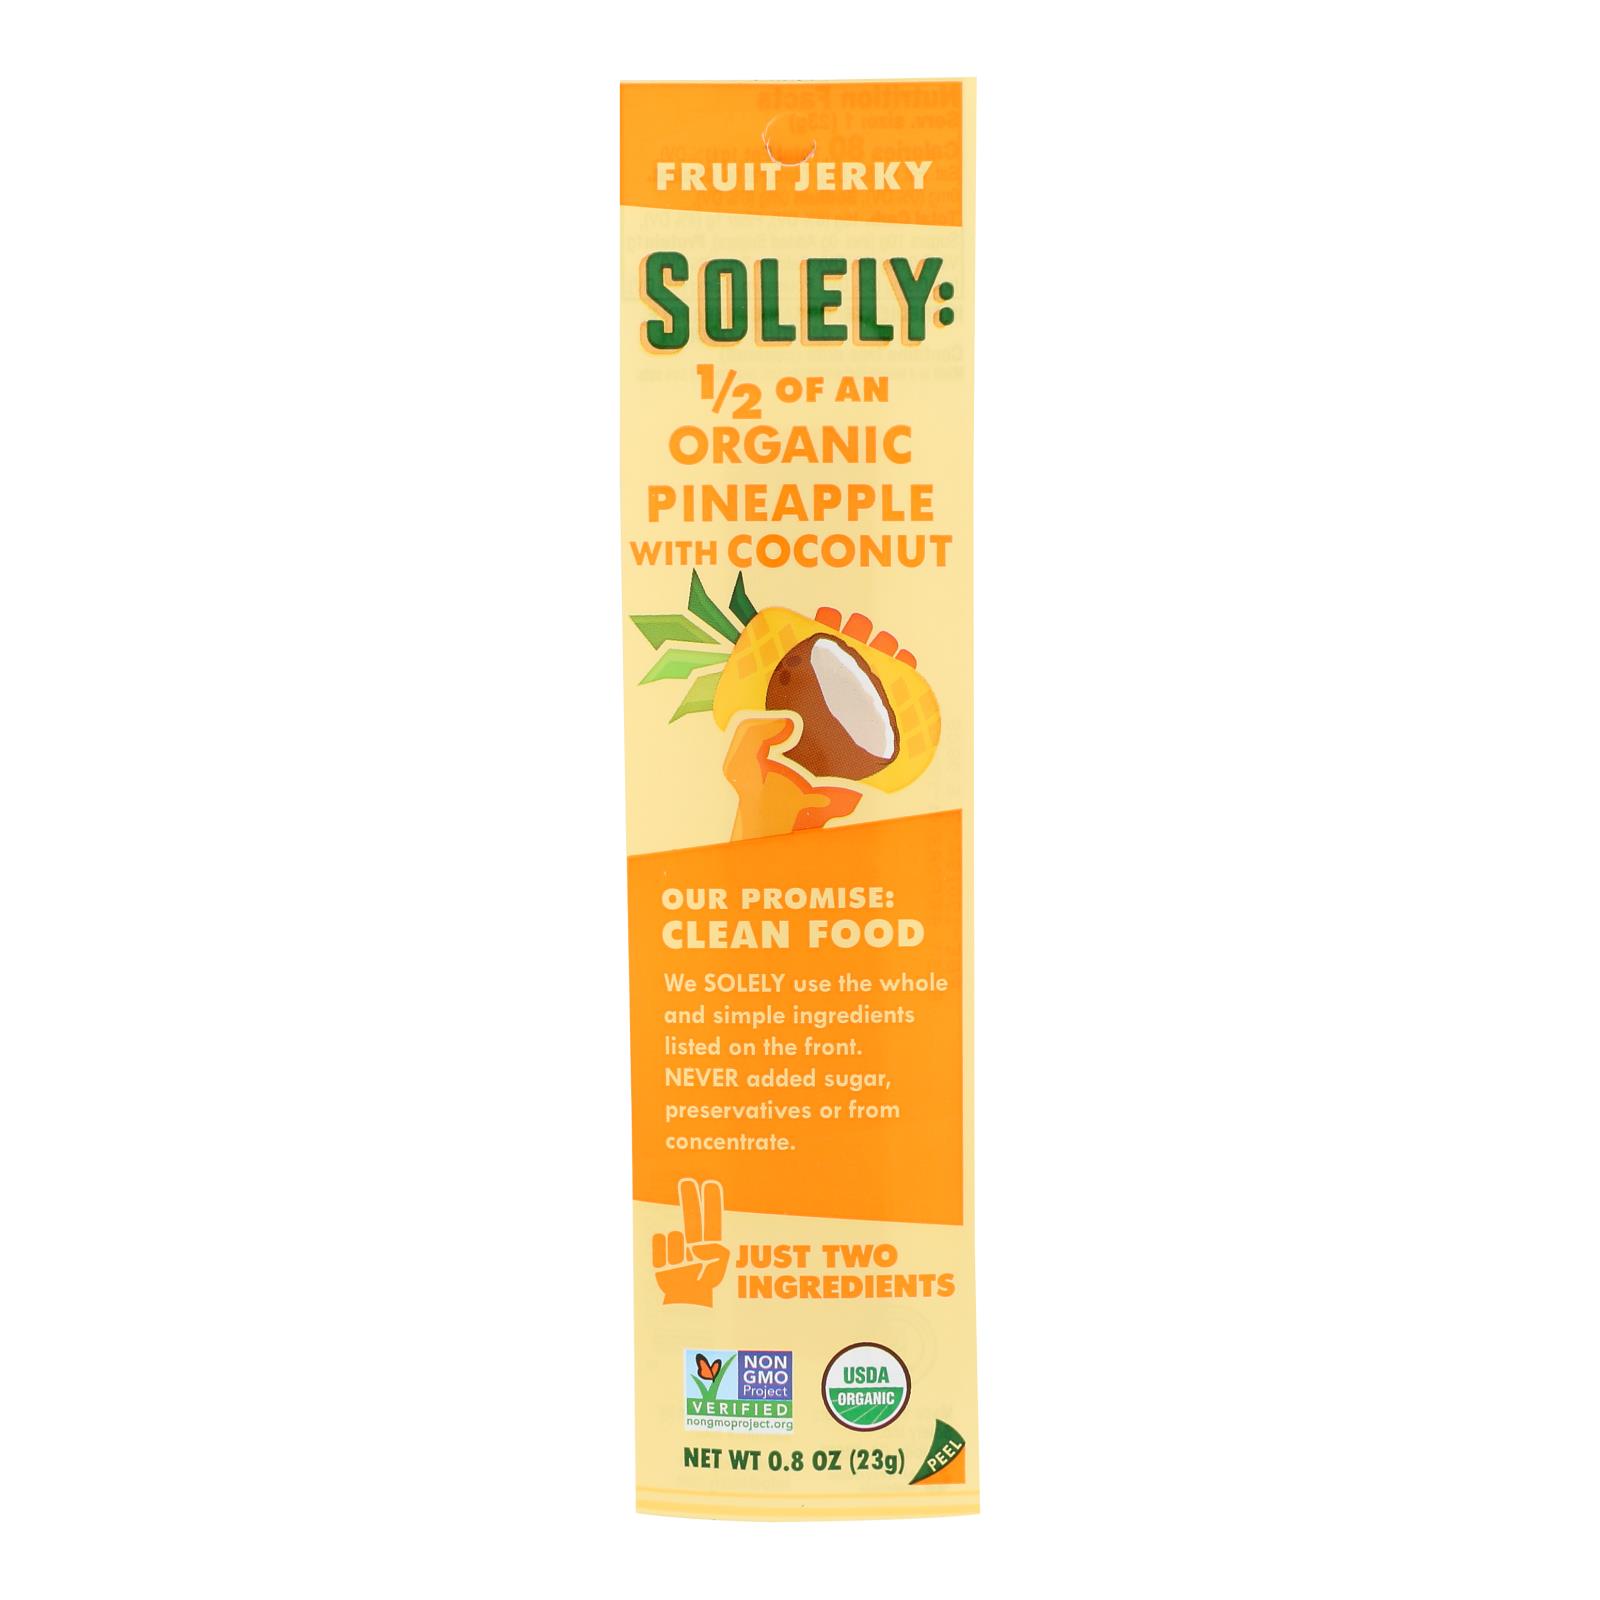 Solely Fruit - Fruit Jerky Pineap Coconut - 12개 묶음상품 - .8 OZ